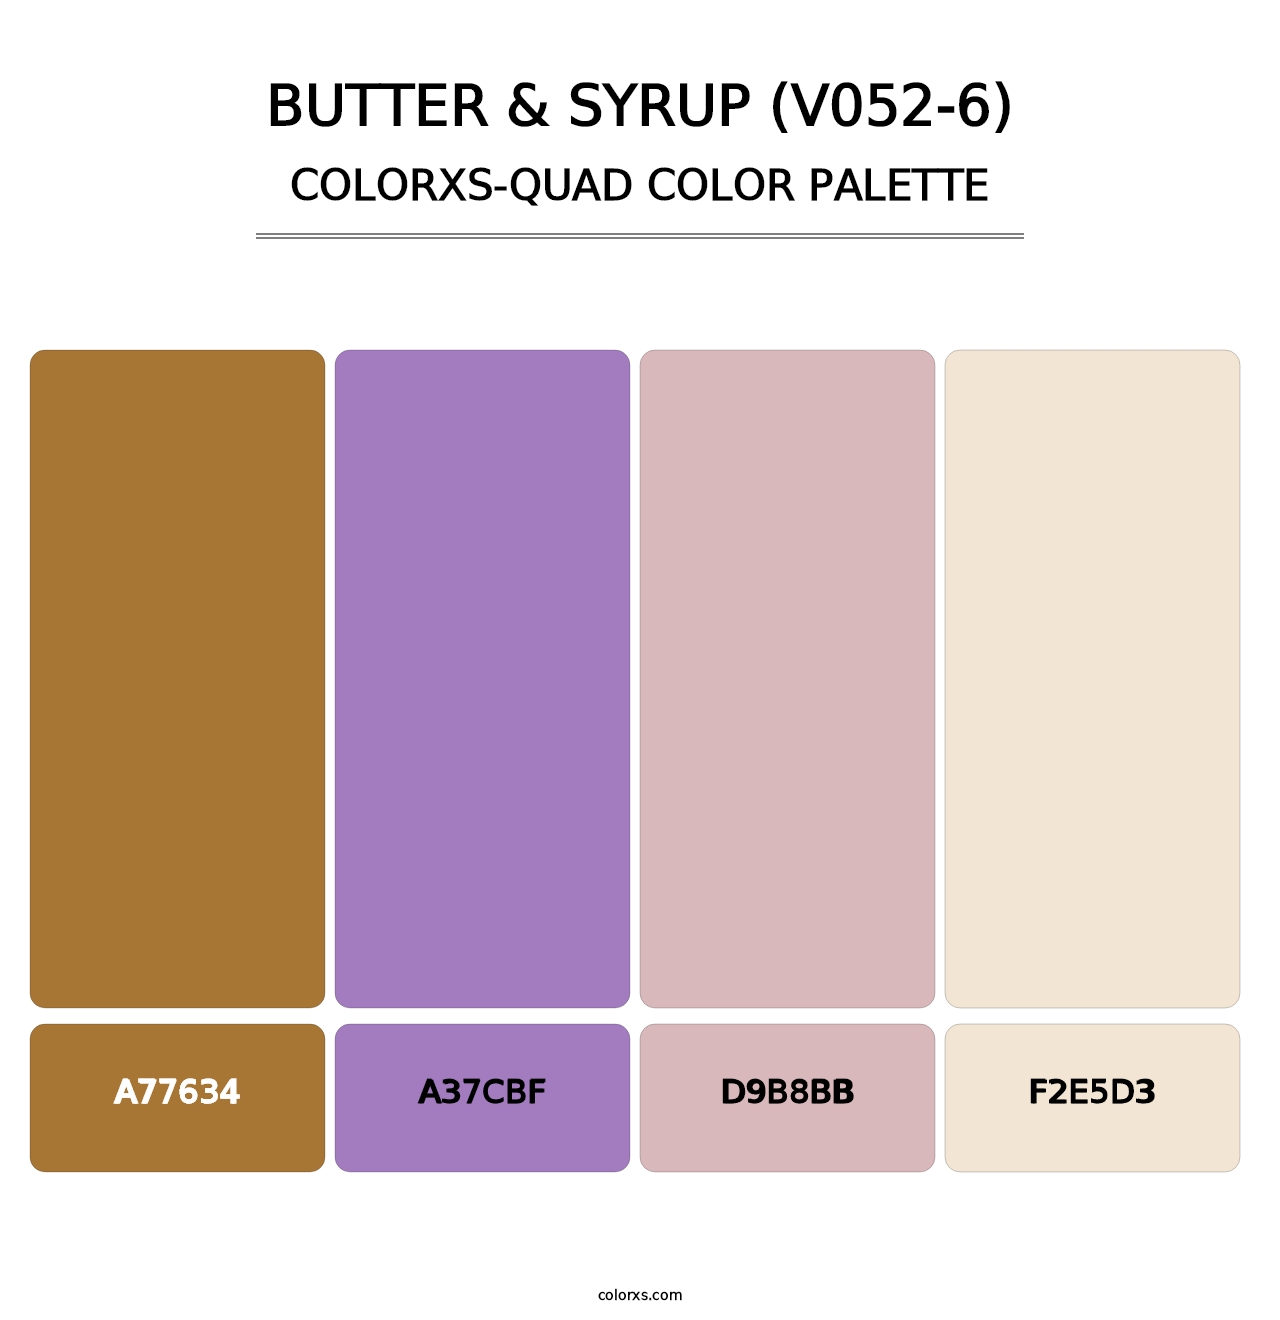 Butter & Syrup (V052-6) - Colorxs Quad Palette